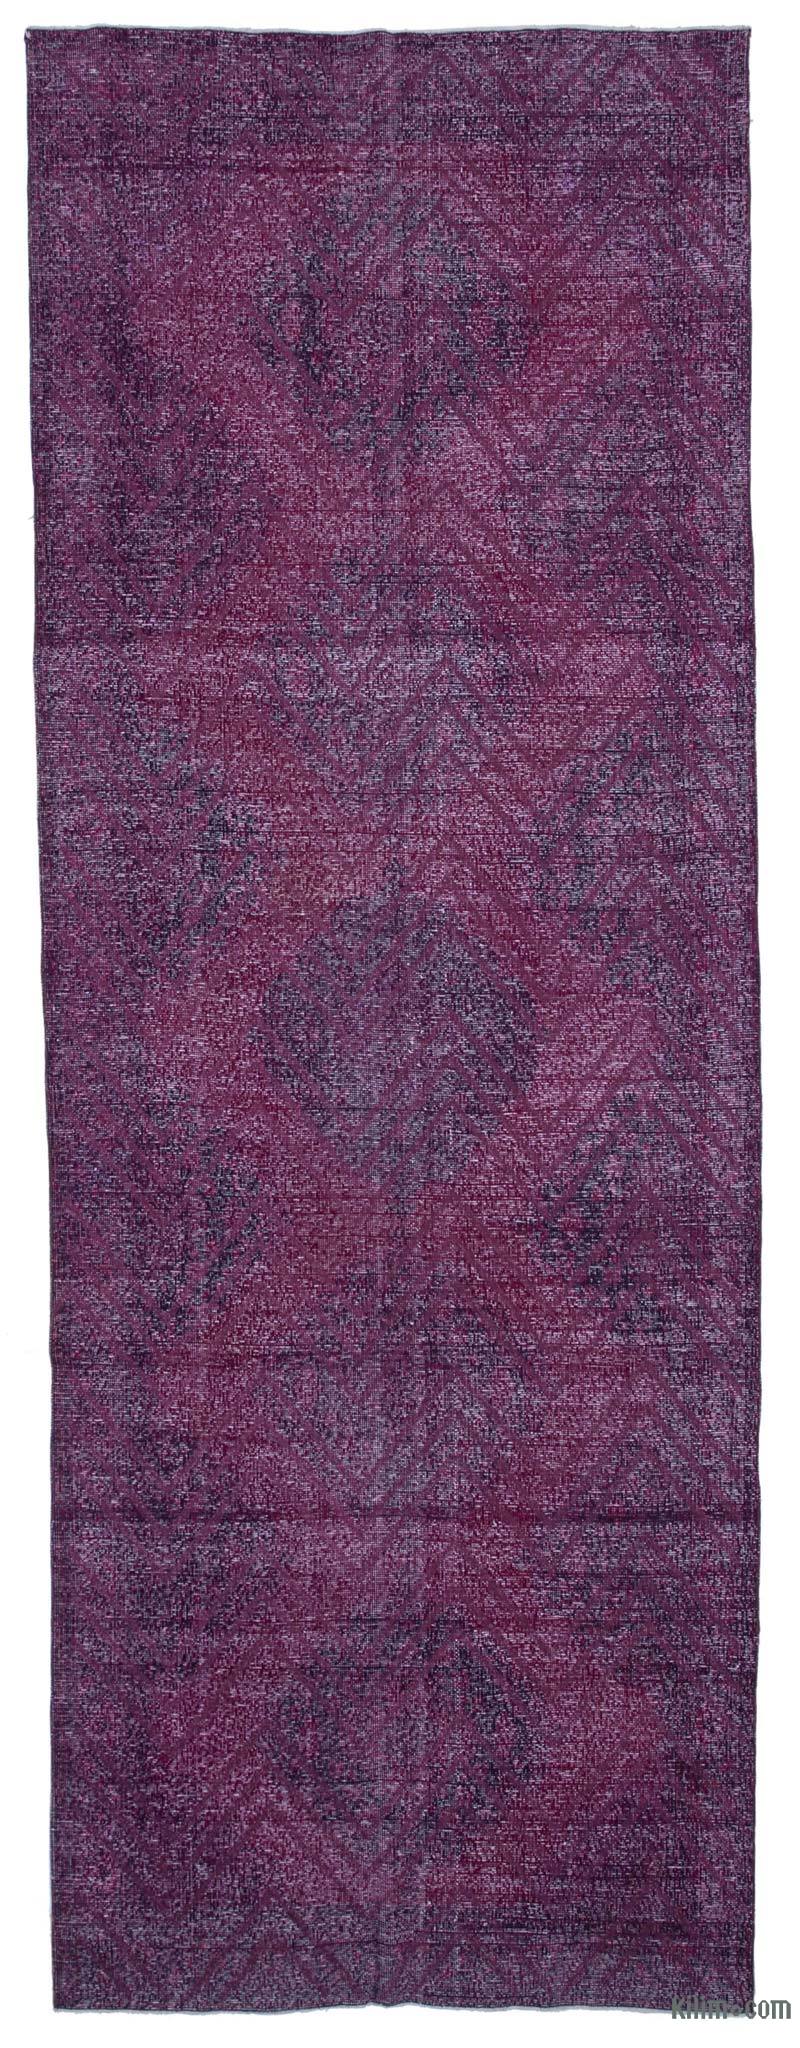 Púrpura Alfombra Turca bordada sobre teñida vintage - 148 cm x 414 cm - K0038698